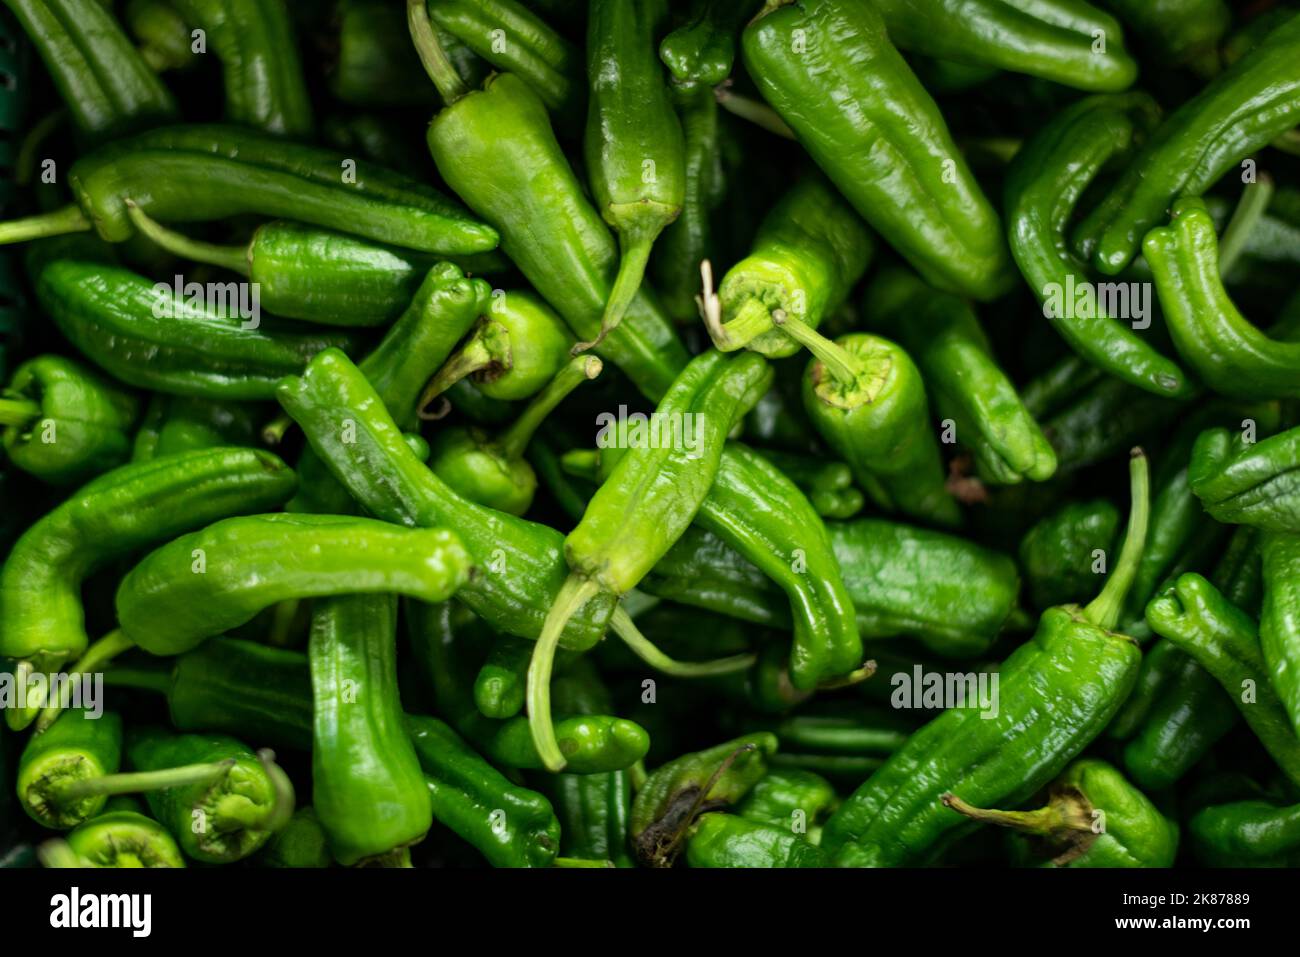 Grüne Paprika Stockfoto